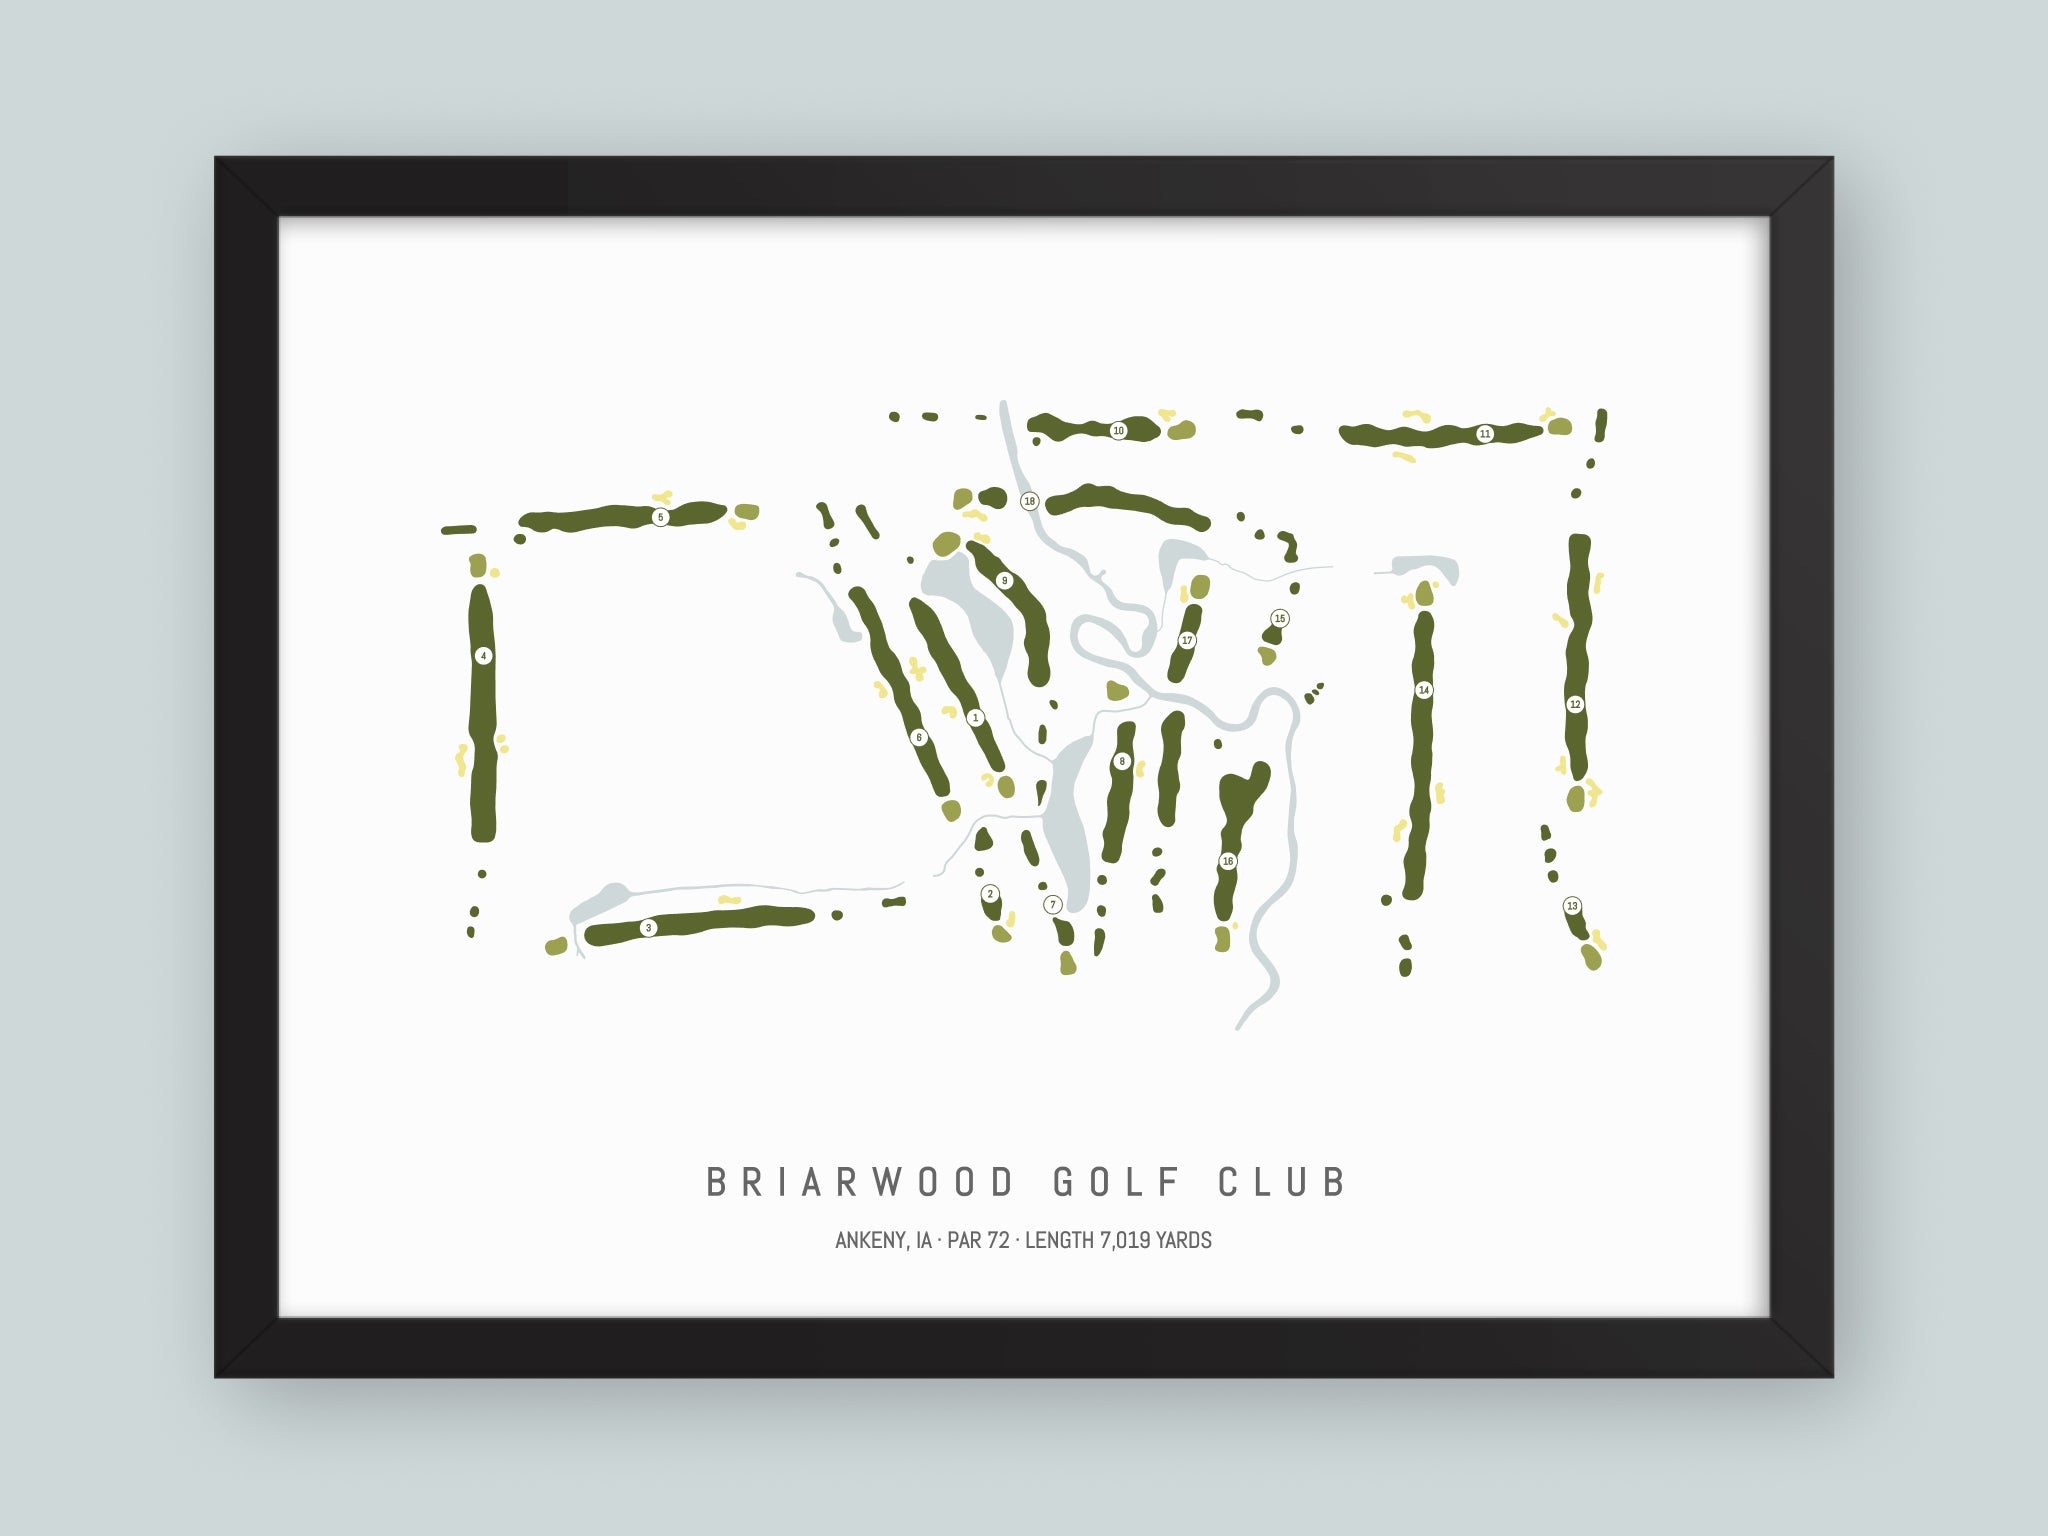 Briarwood-Golf-Club-IA--Black-Frame-24x18-With-Hole-Numbers